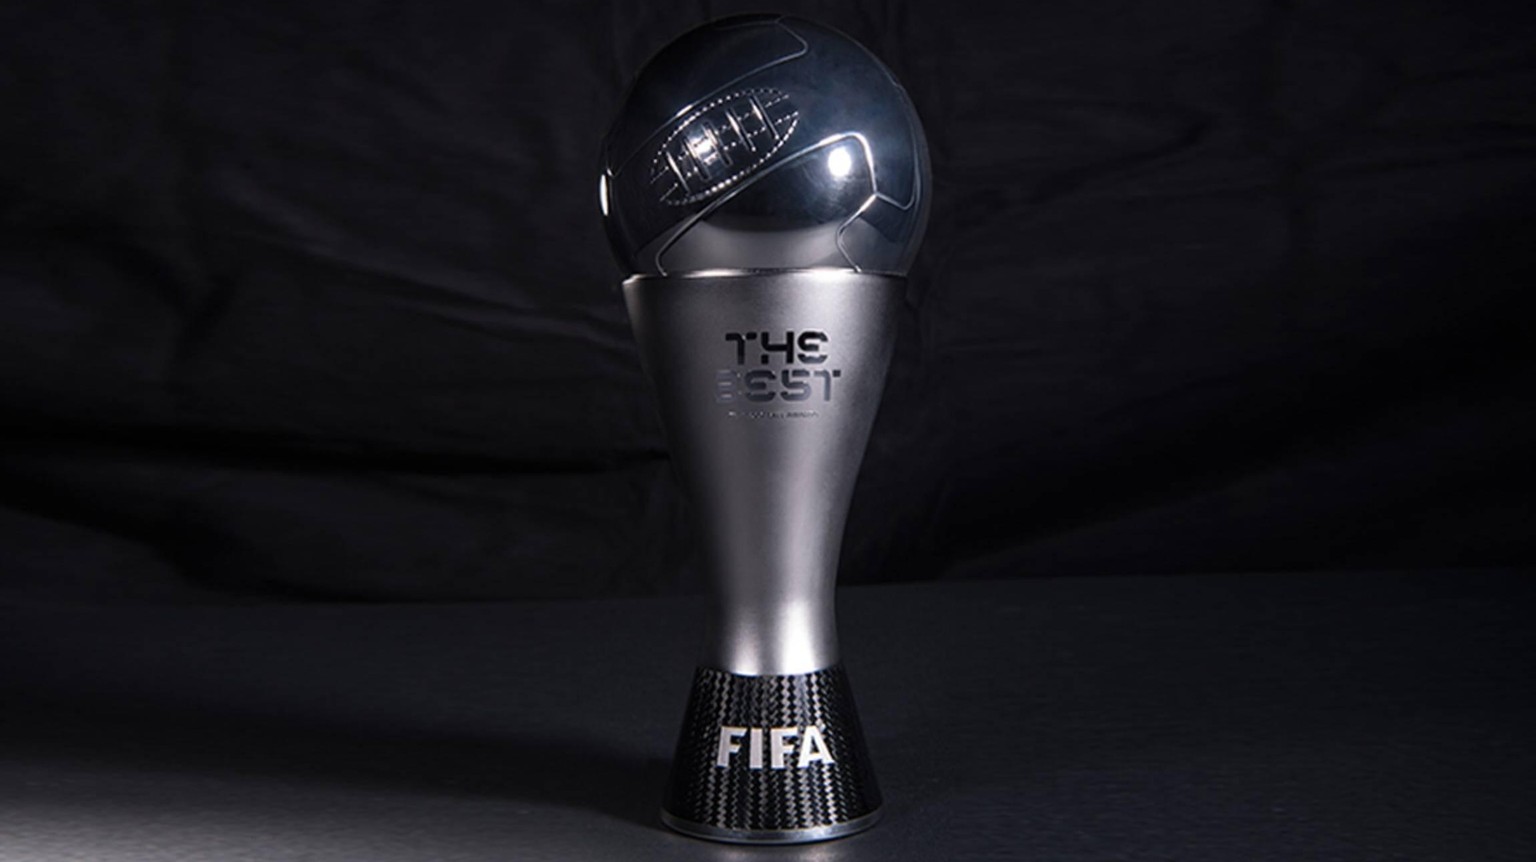 Fussball International FIFA The Best Football Awards 2016 06.01.2017 Neue Trophaee, Trophy PUBLICATIONxNOTxINxAUTxSUIxITA

Football International FIFA The Best Football Awards 2016 06 01 2017 new Tr ...